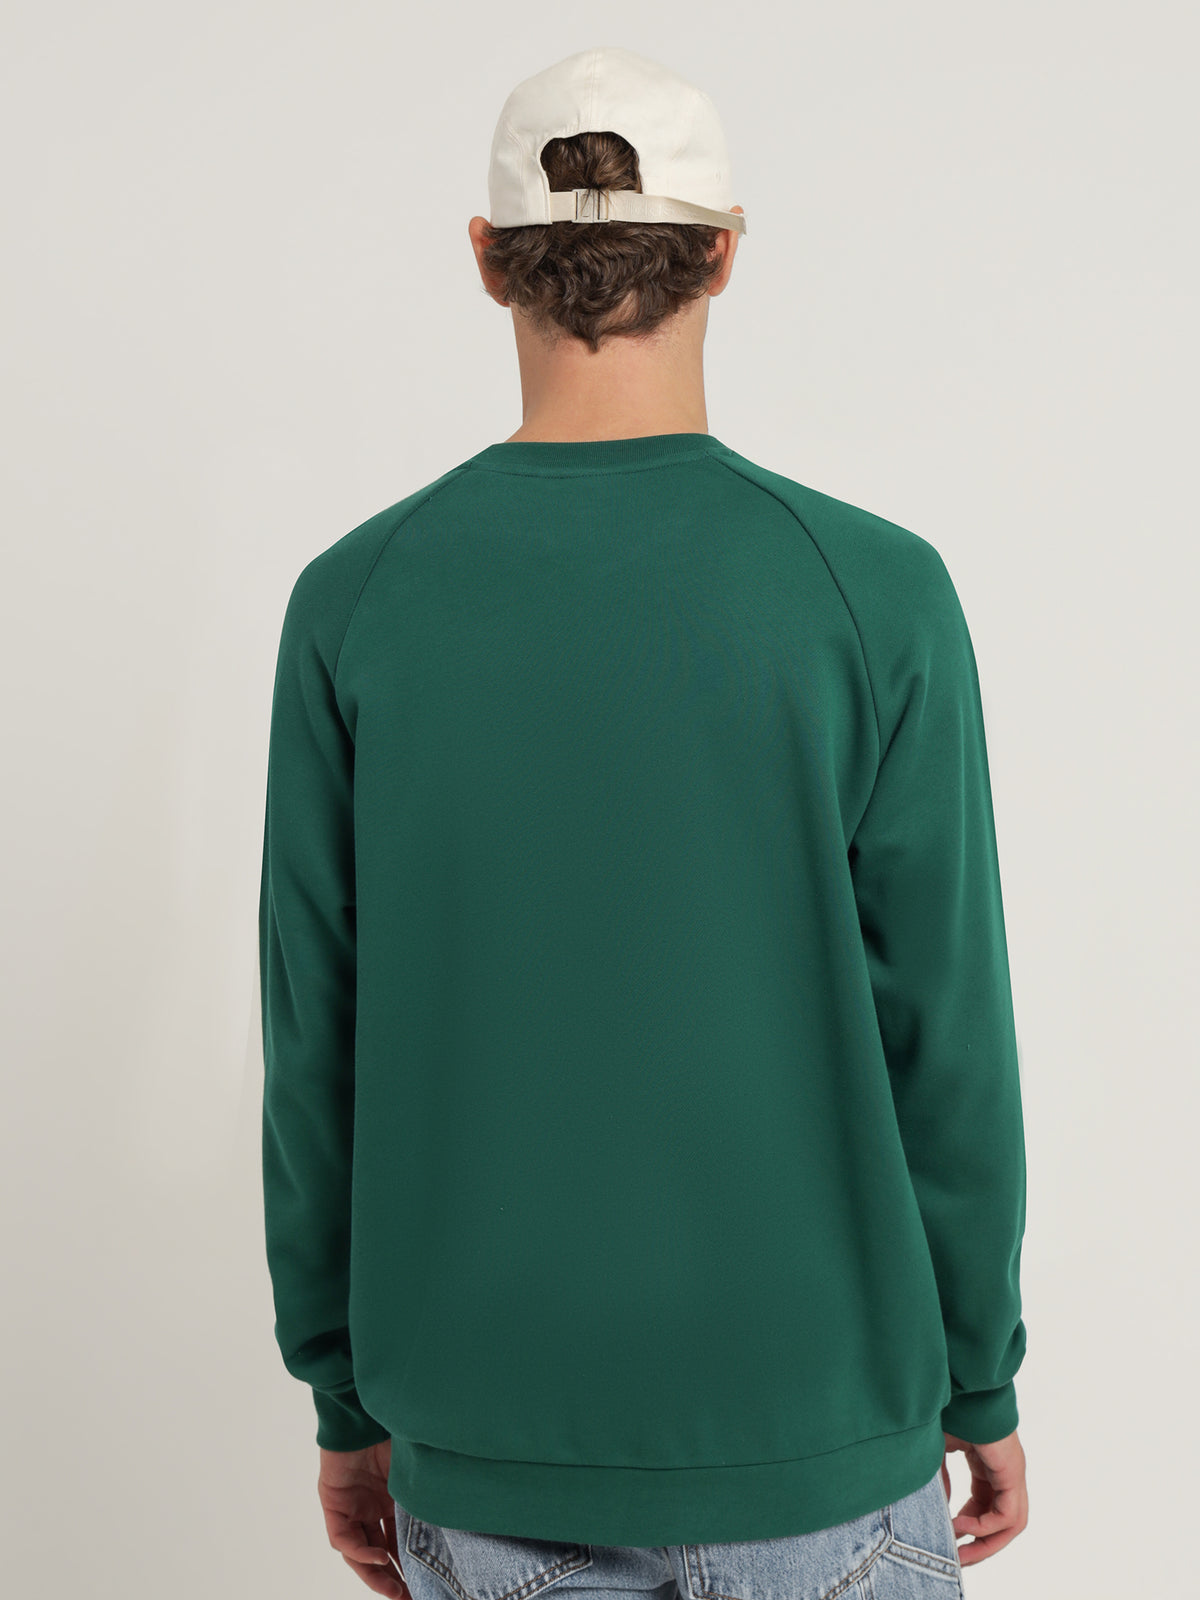 Club Sweater in Dark Green